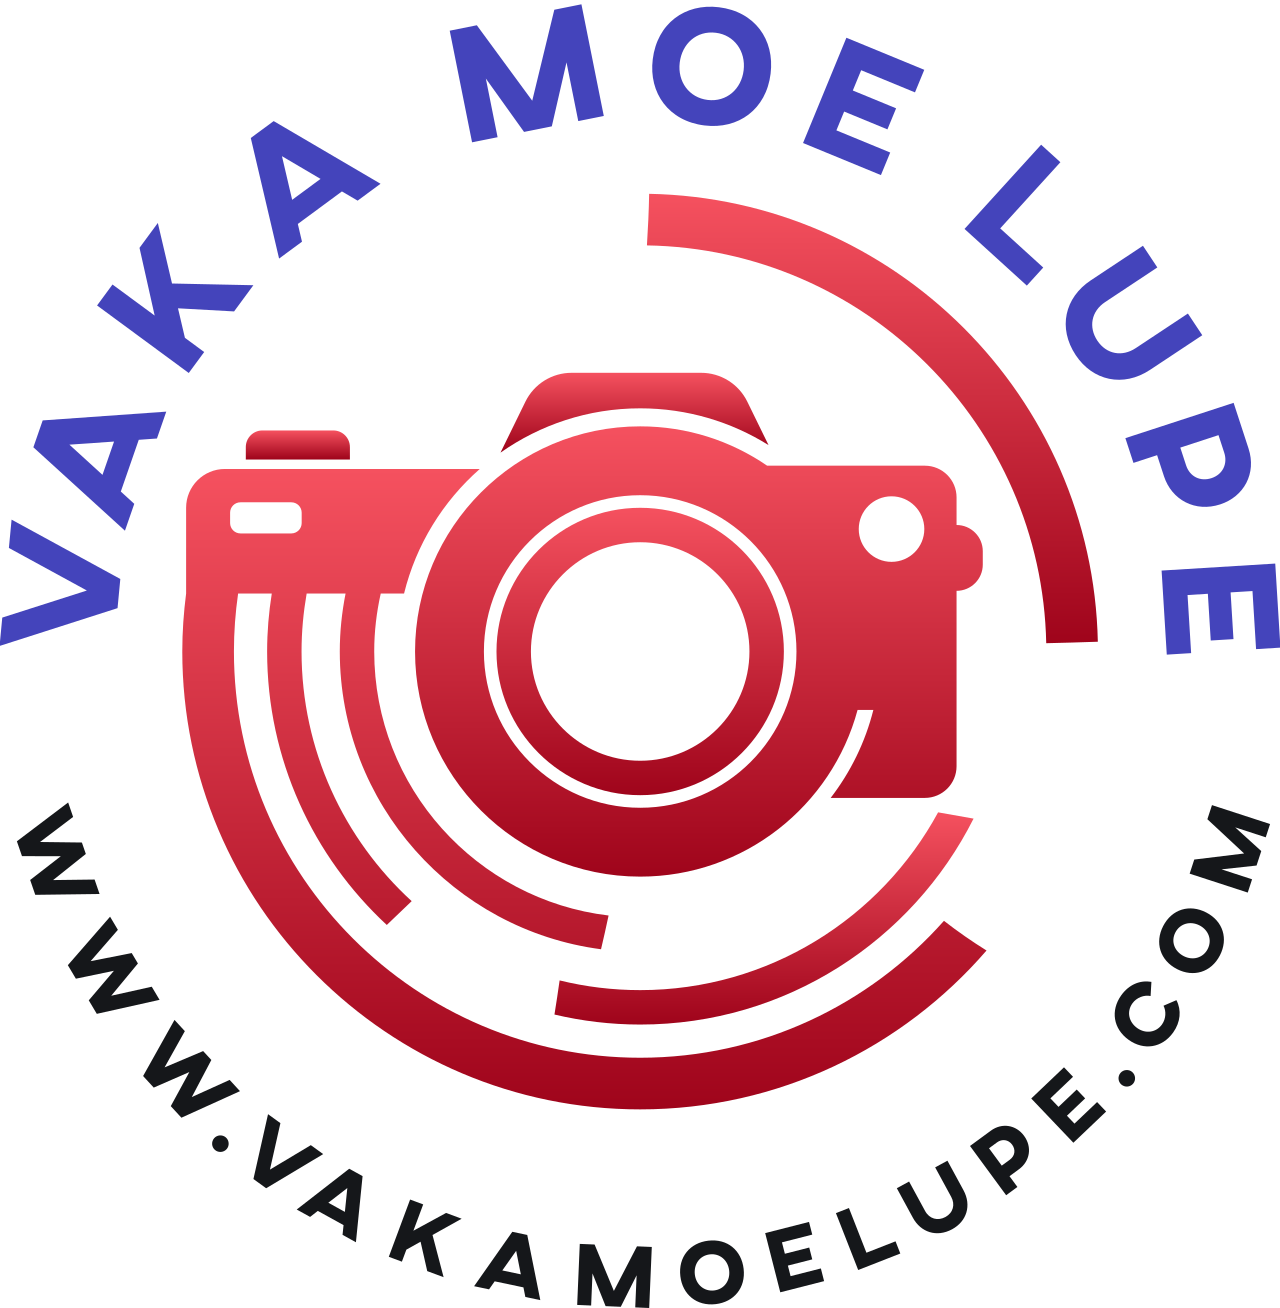 Vaka Moe Lupe's logo